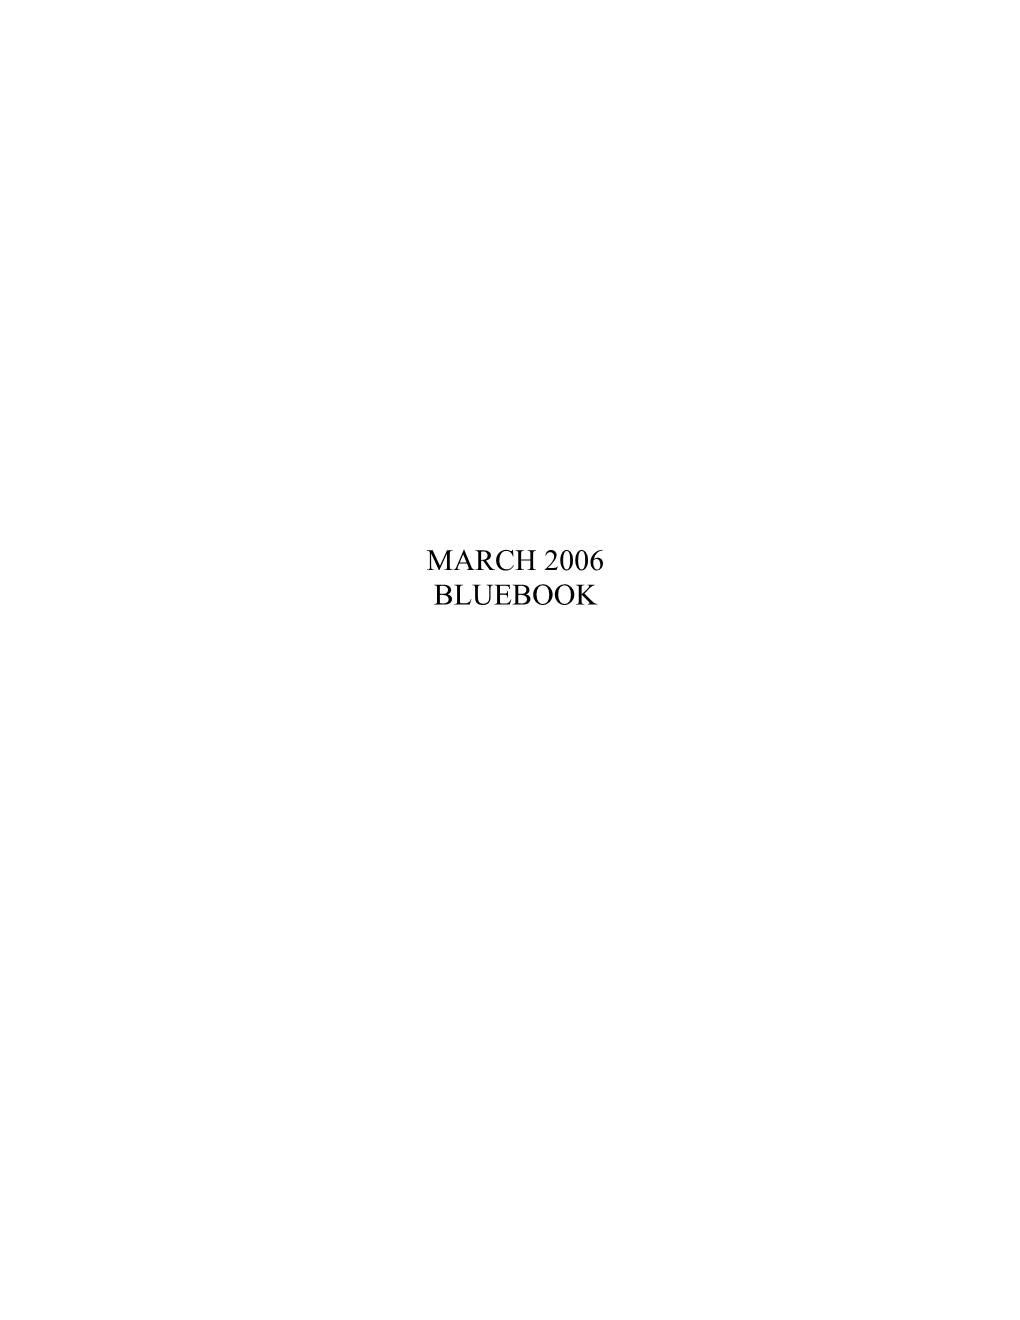 March 2006 Bluebook